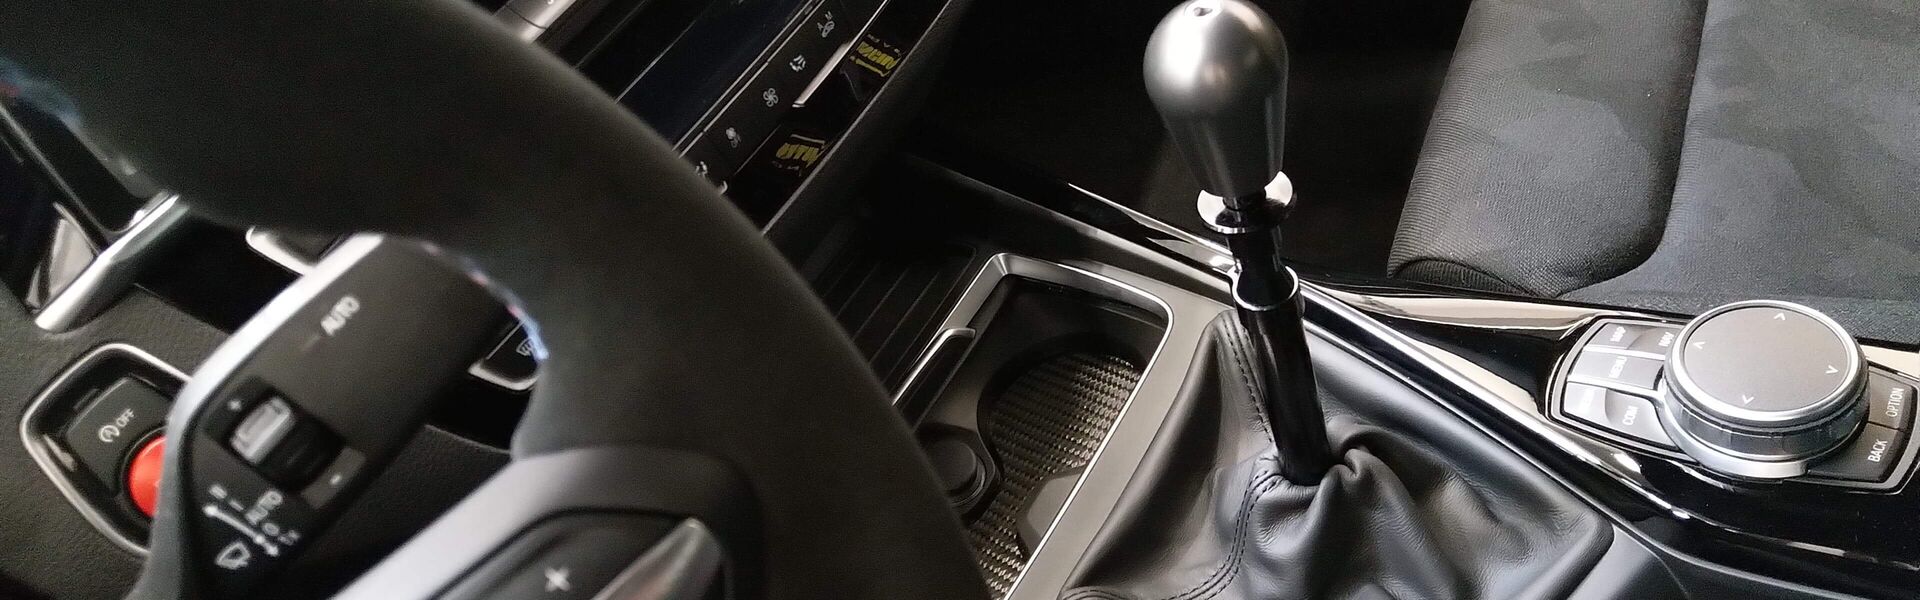 Převodovka/Řazení  pro automobil Lamborghini Huracán LP 610